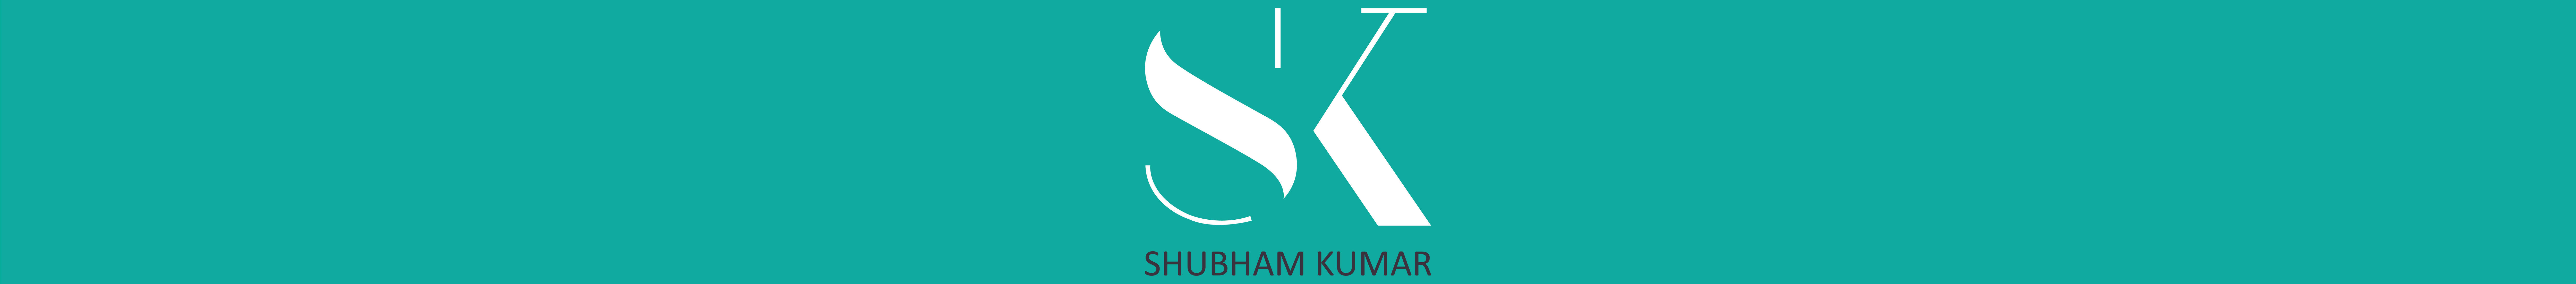 Shubham Kumar's profile banner